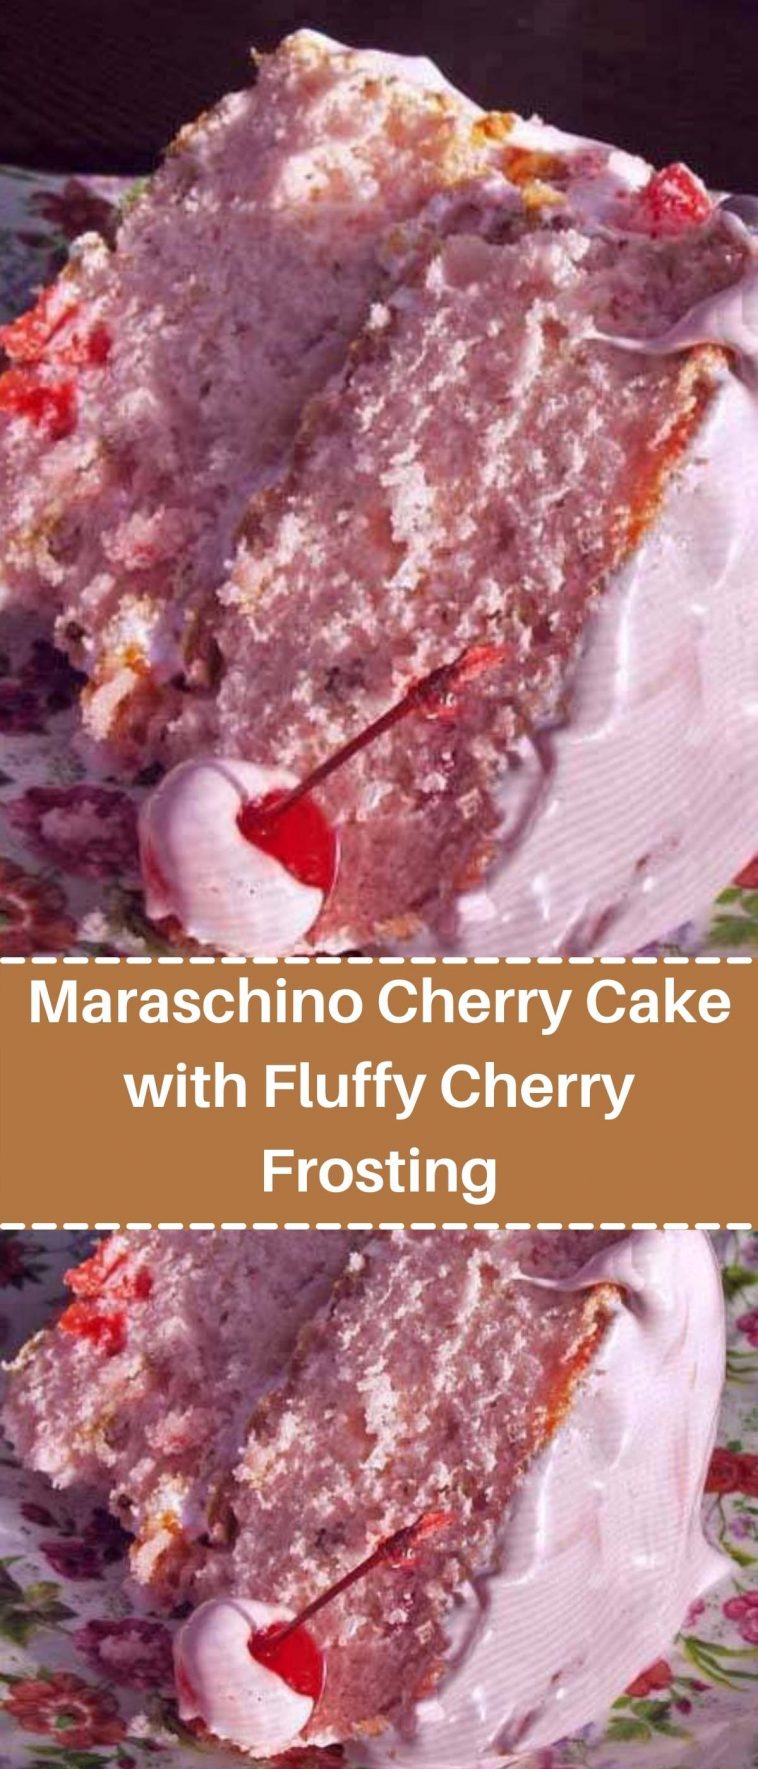 Maraschino Cherry Cake with Fluffy Cherry Frosting